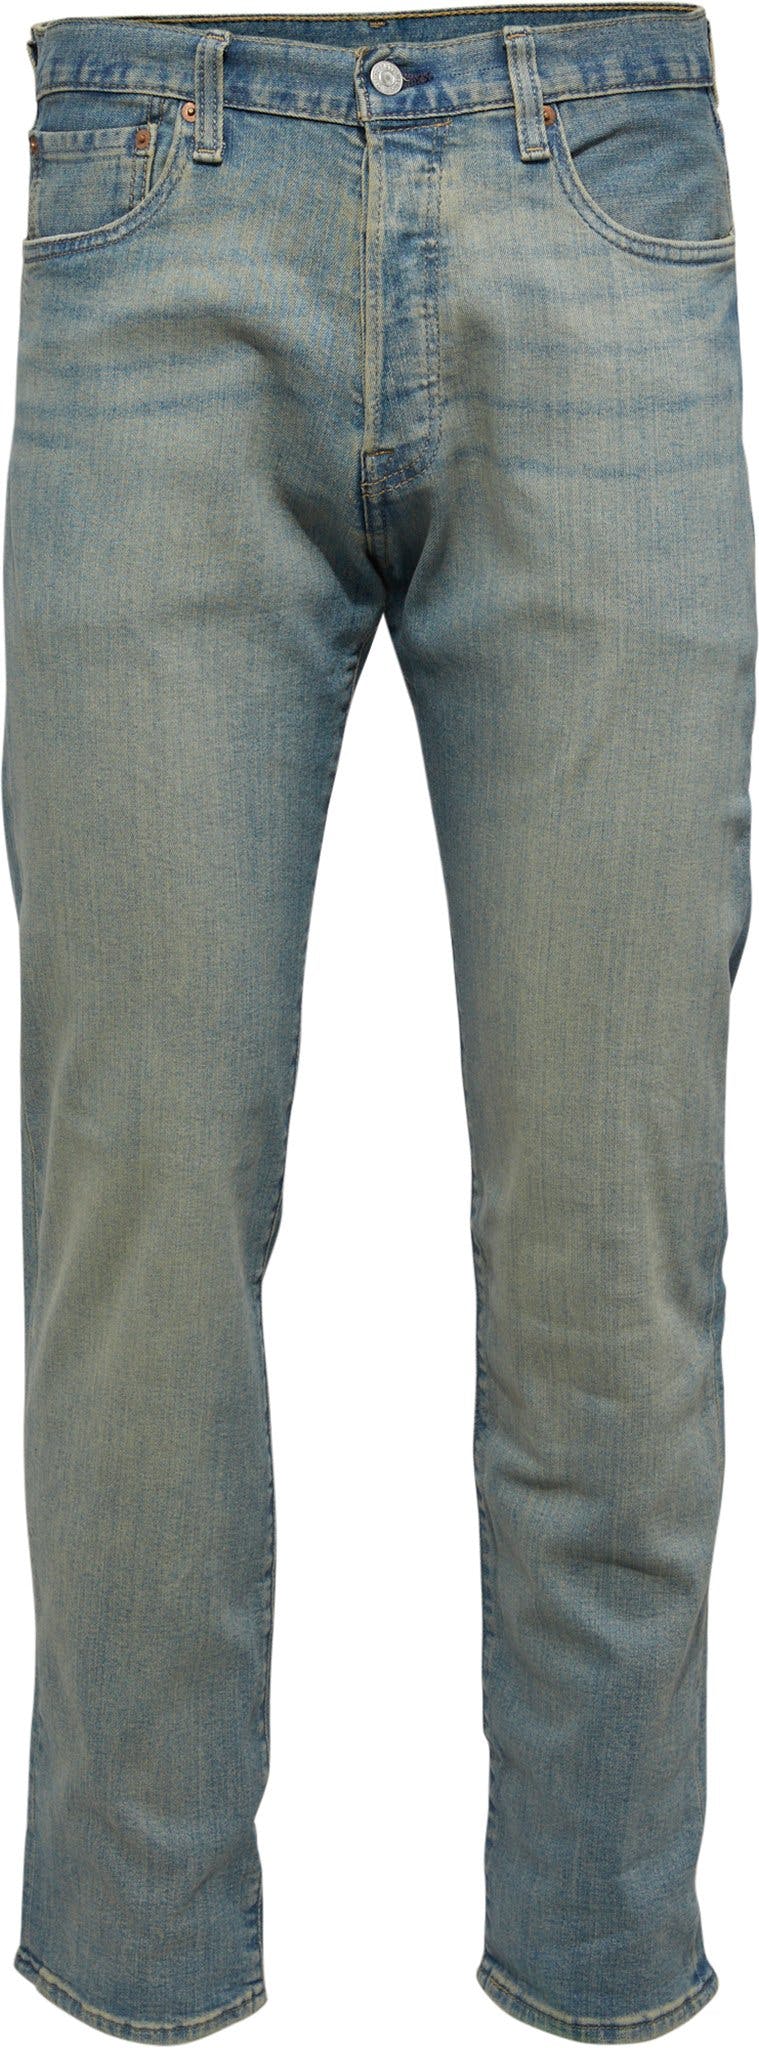 Product image for 501 Original Fit Jeans - Men's